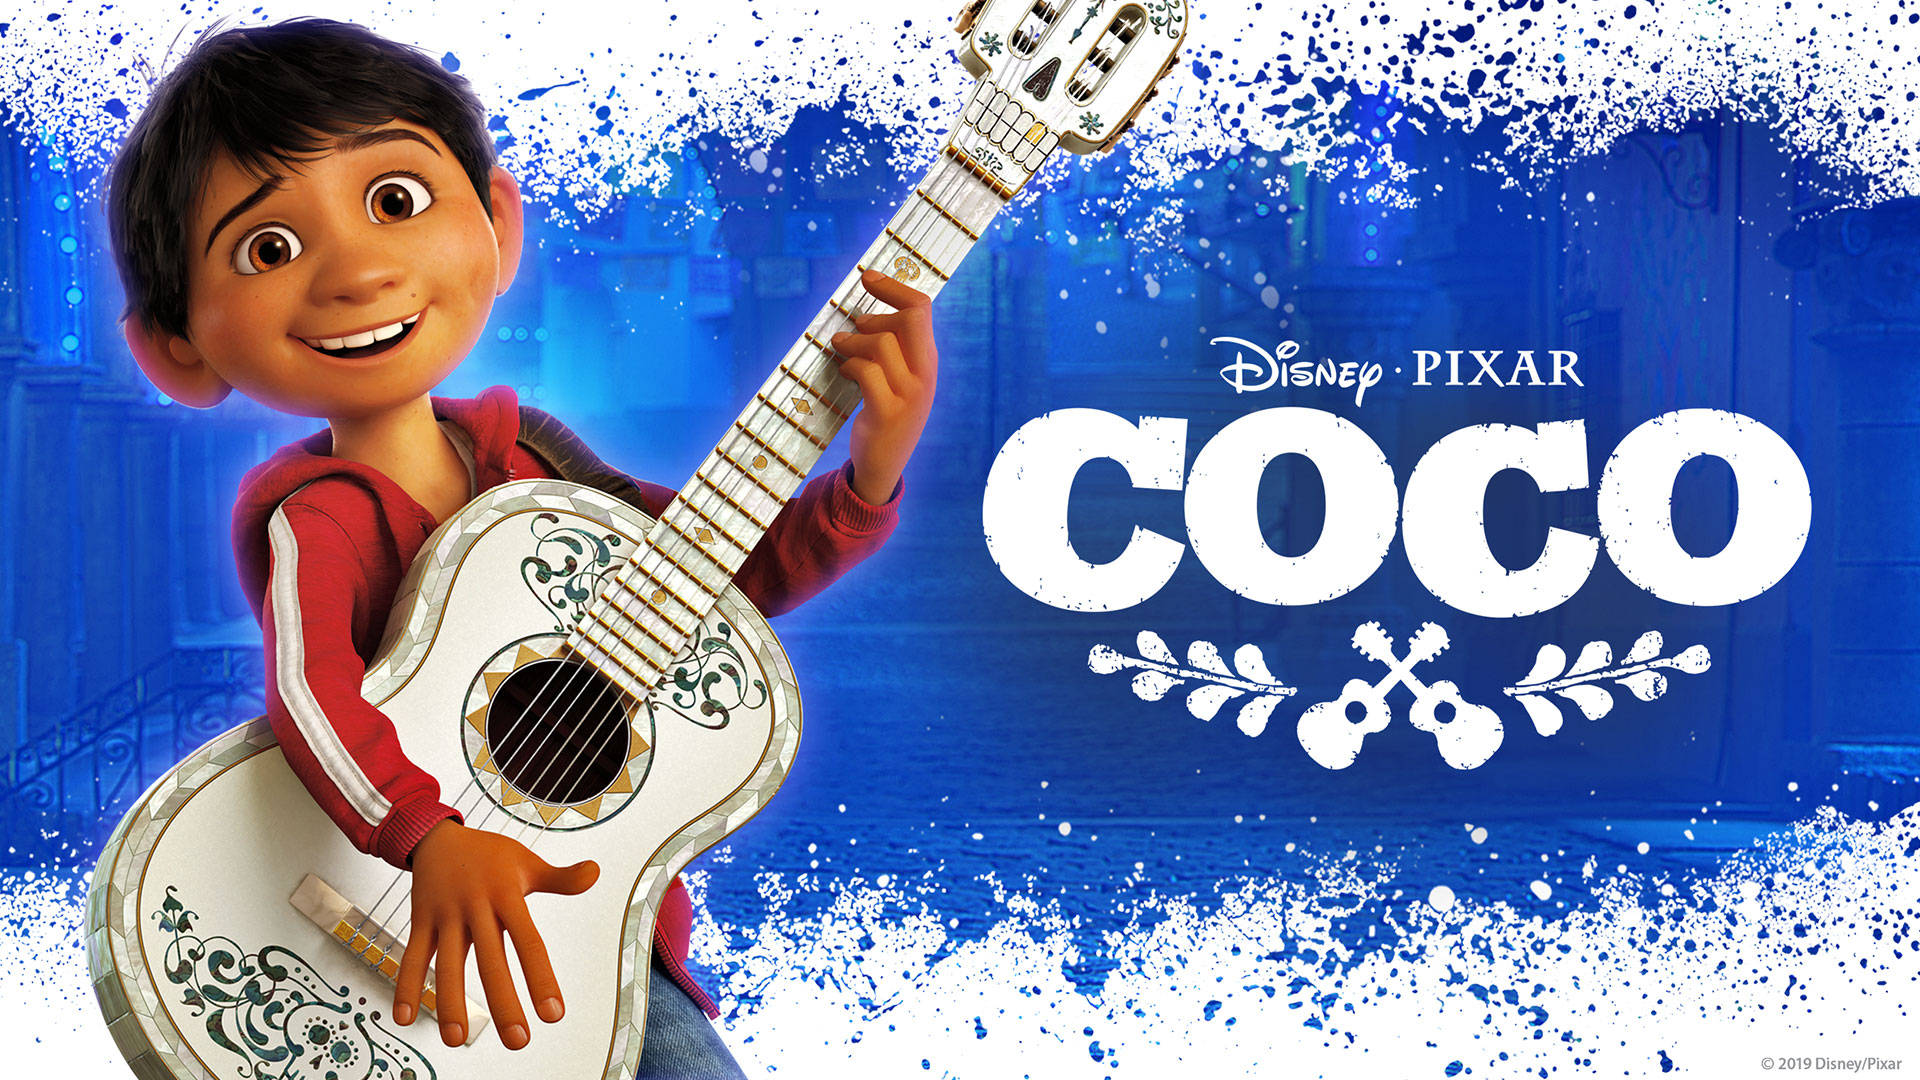 Coco Poster In Winter Theme